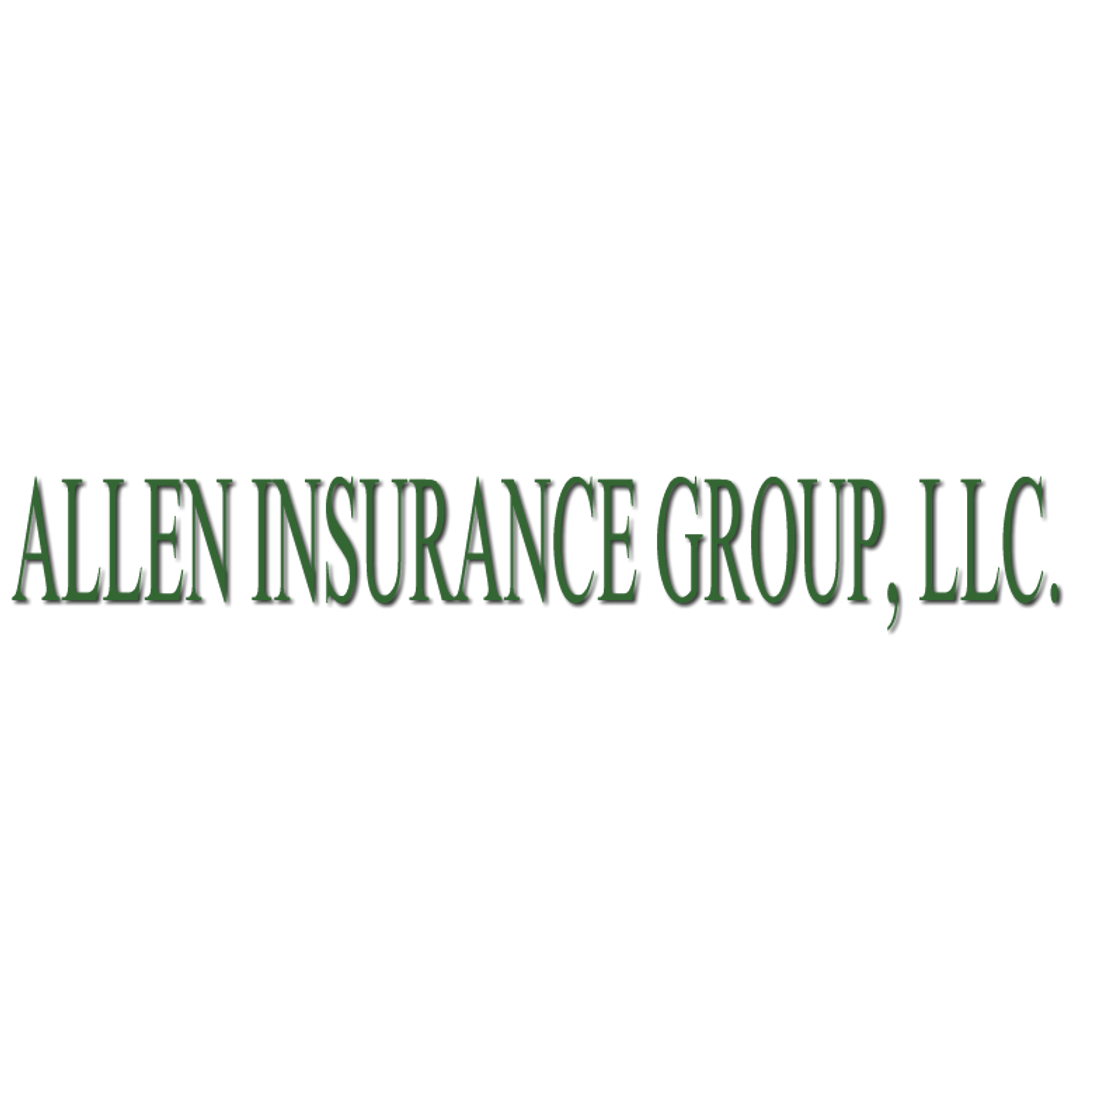 Allen Insurance Group - Columbia, TN 38401 - (931)388-9020 | ShowMeLocal.com